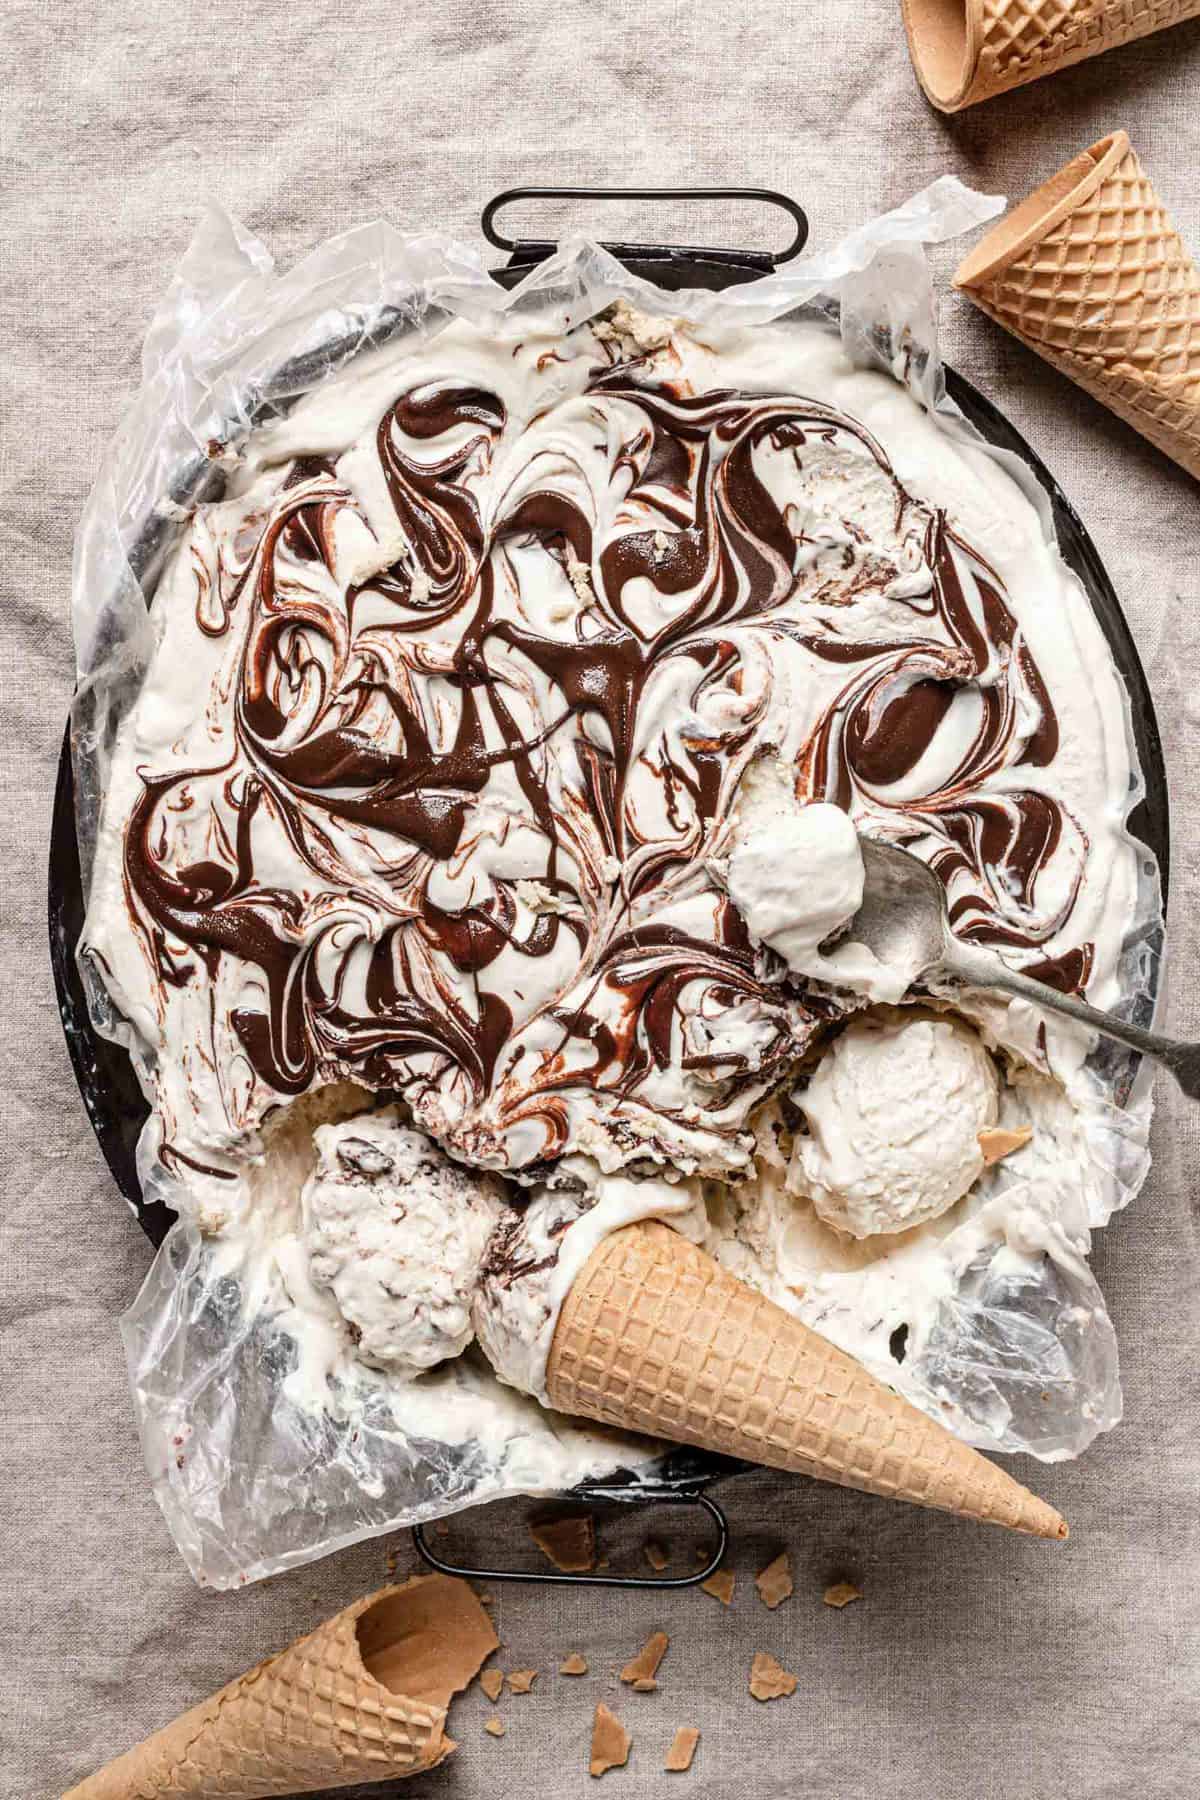 tahini chocolate ice cream 